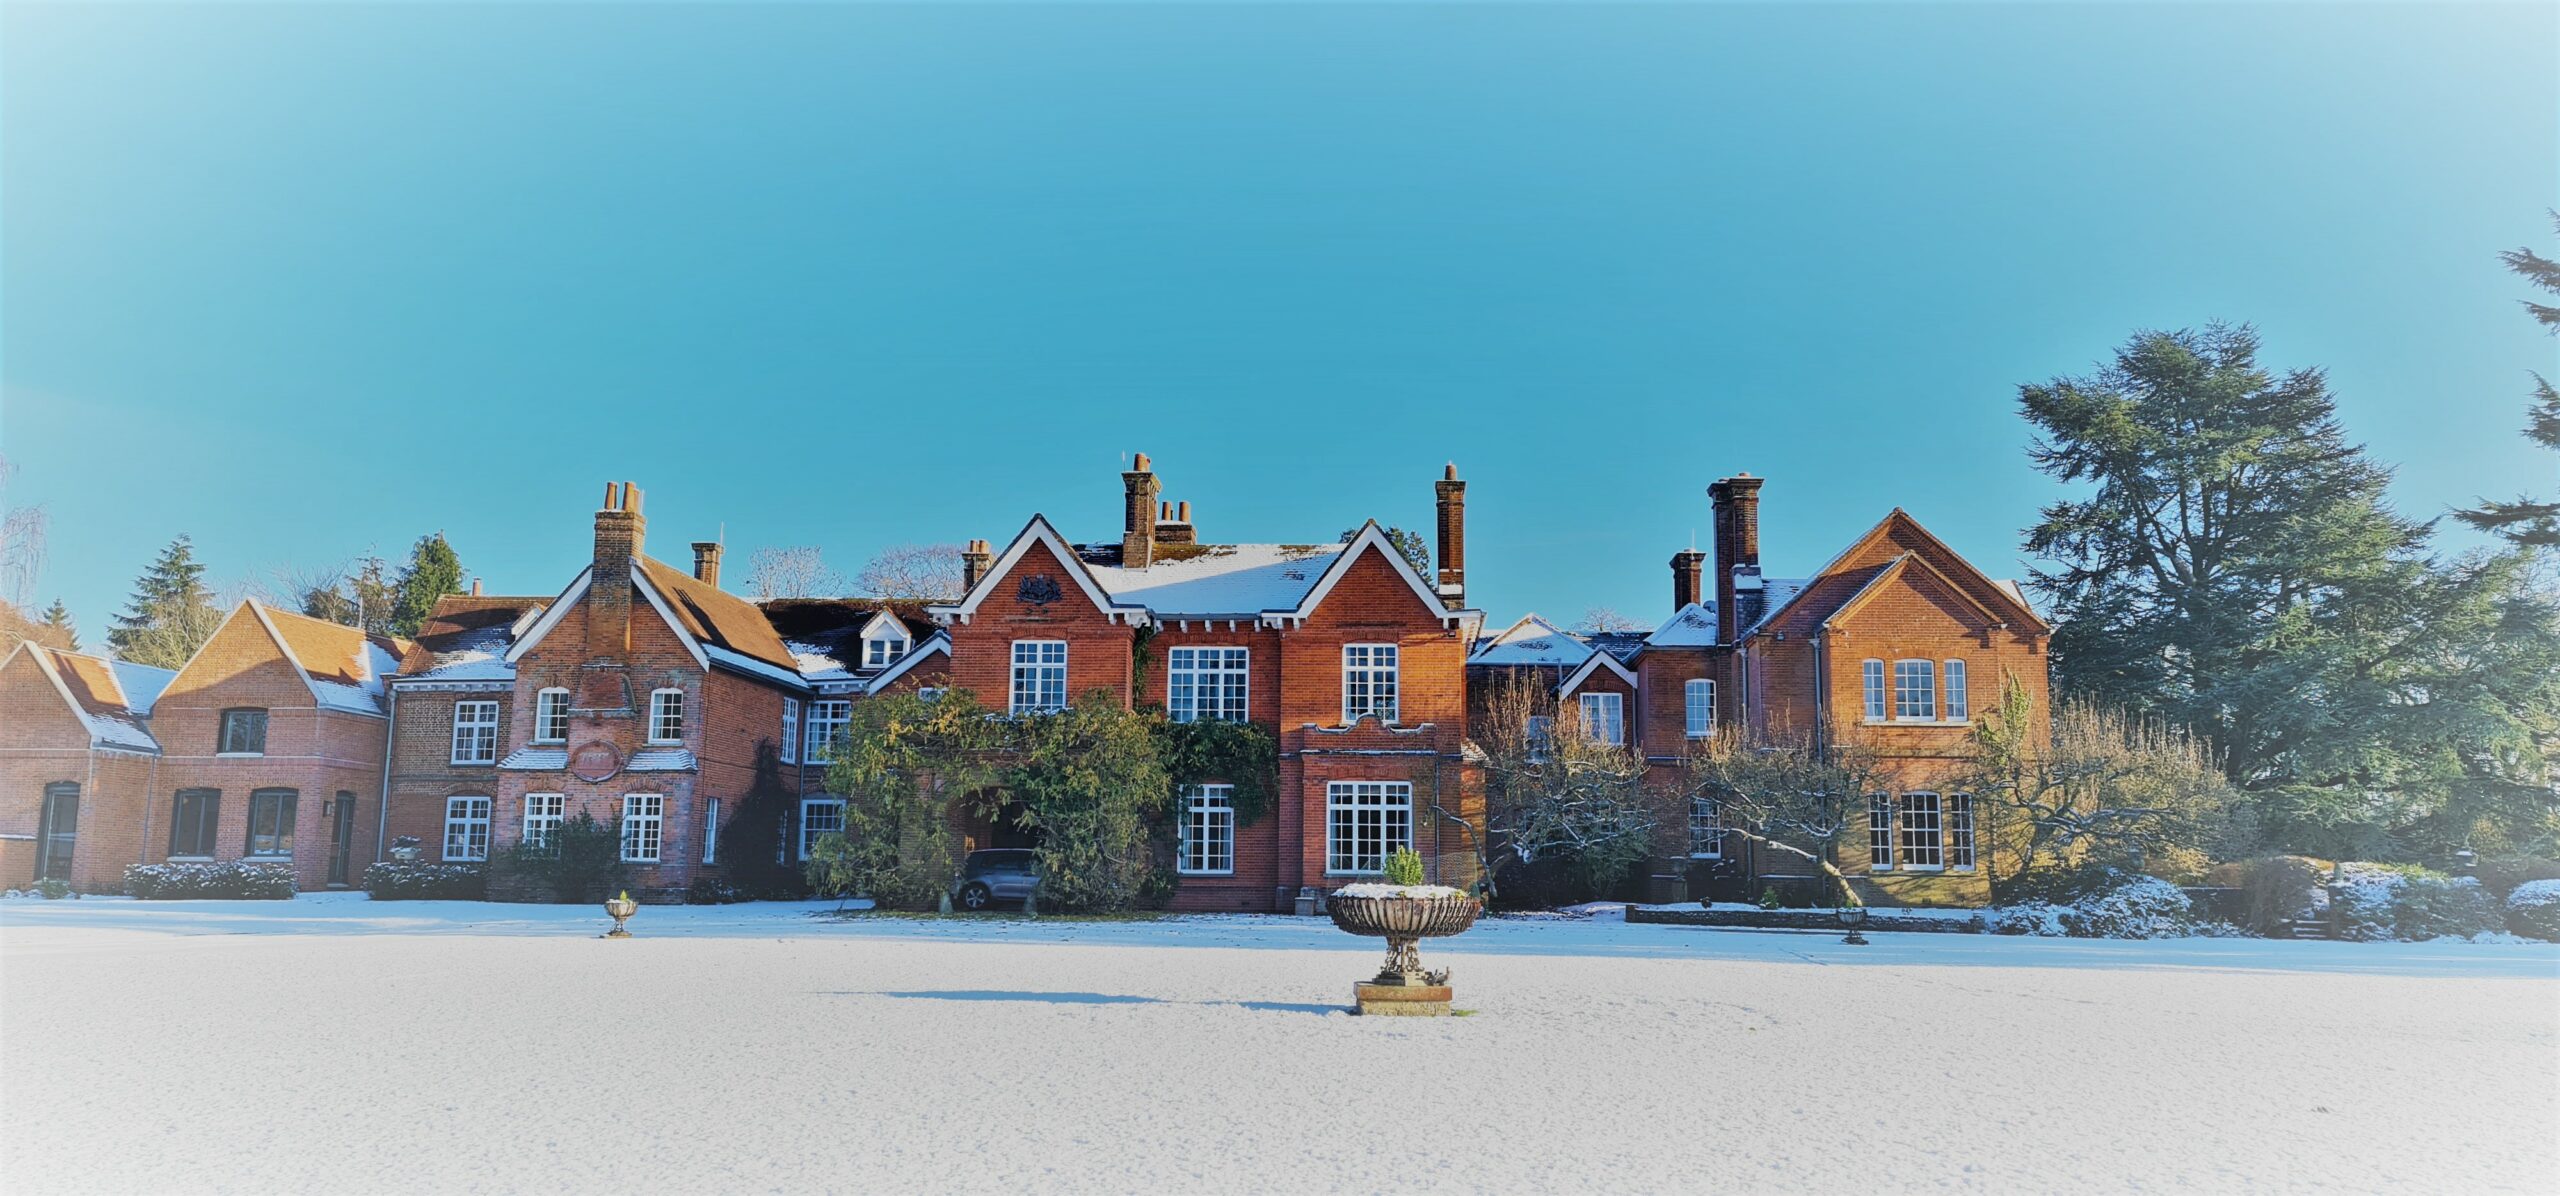 Penn House – The Penn House Estate, Buckinghamshire